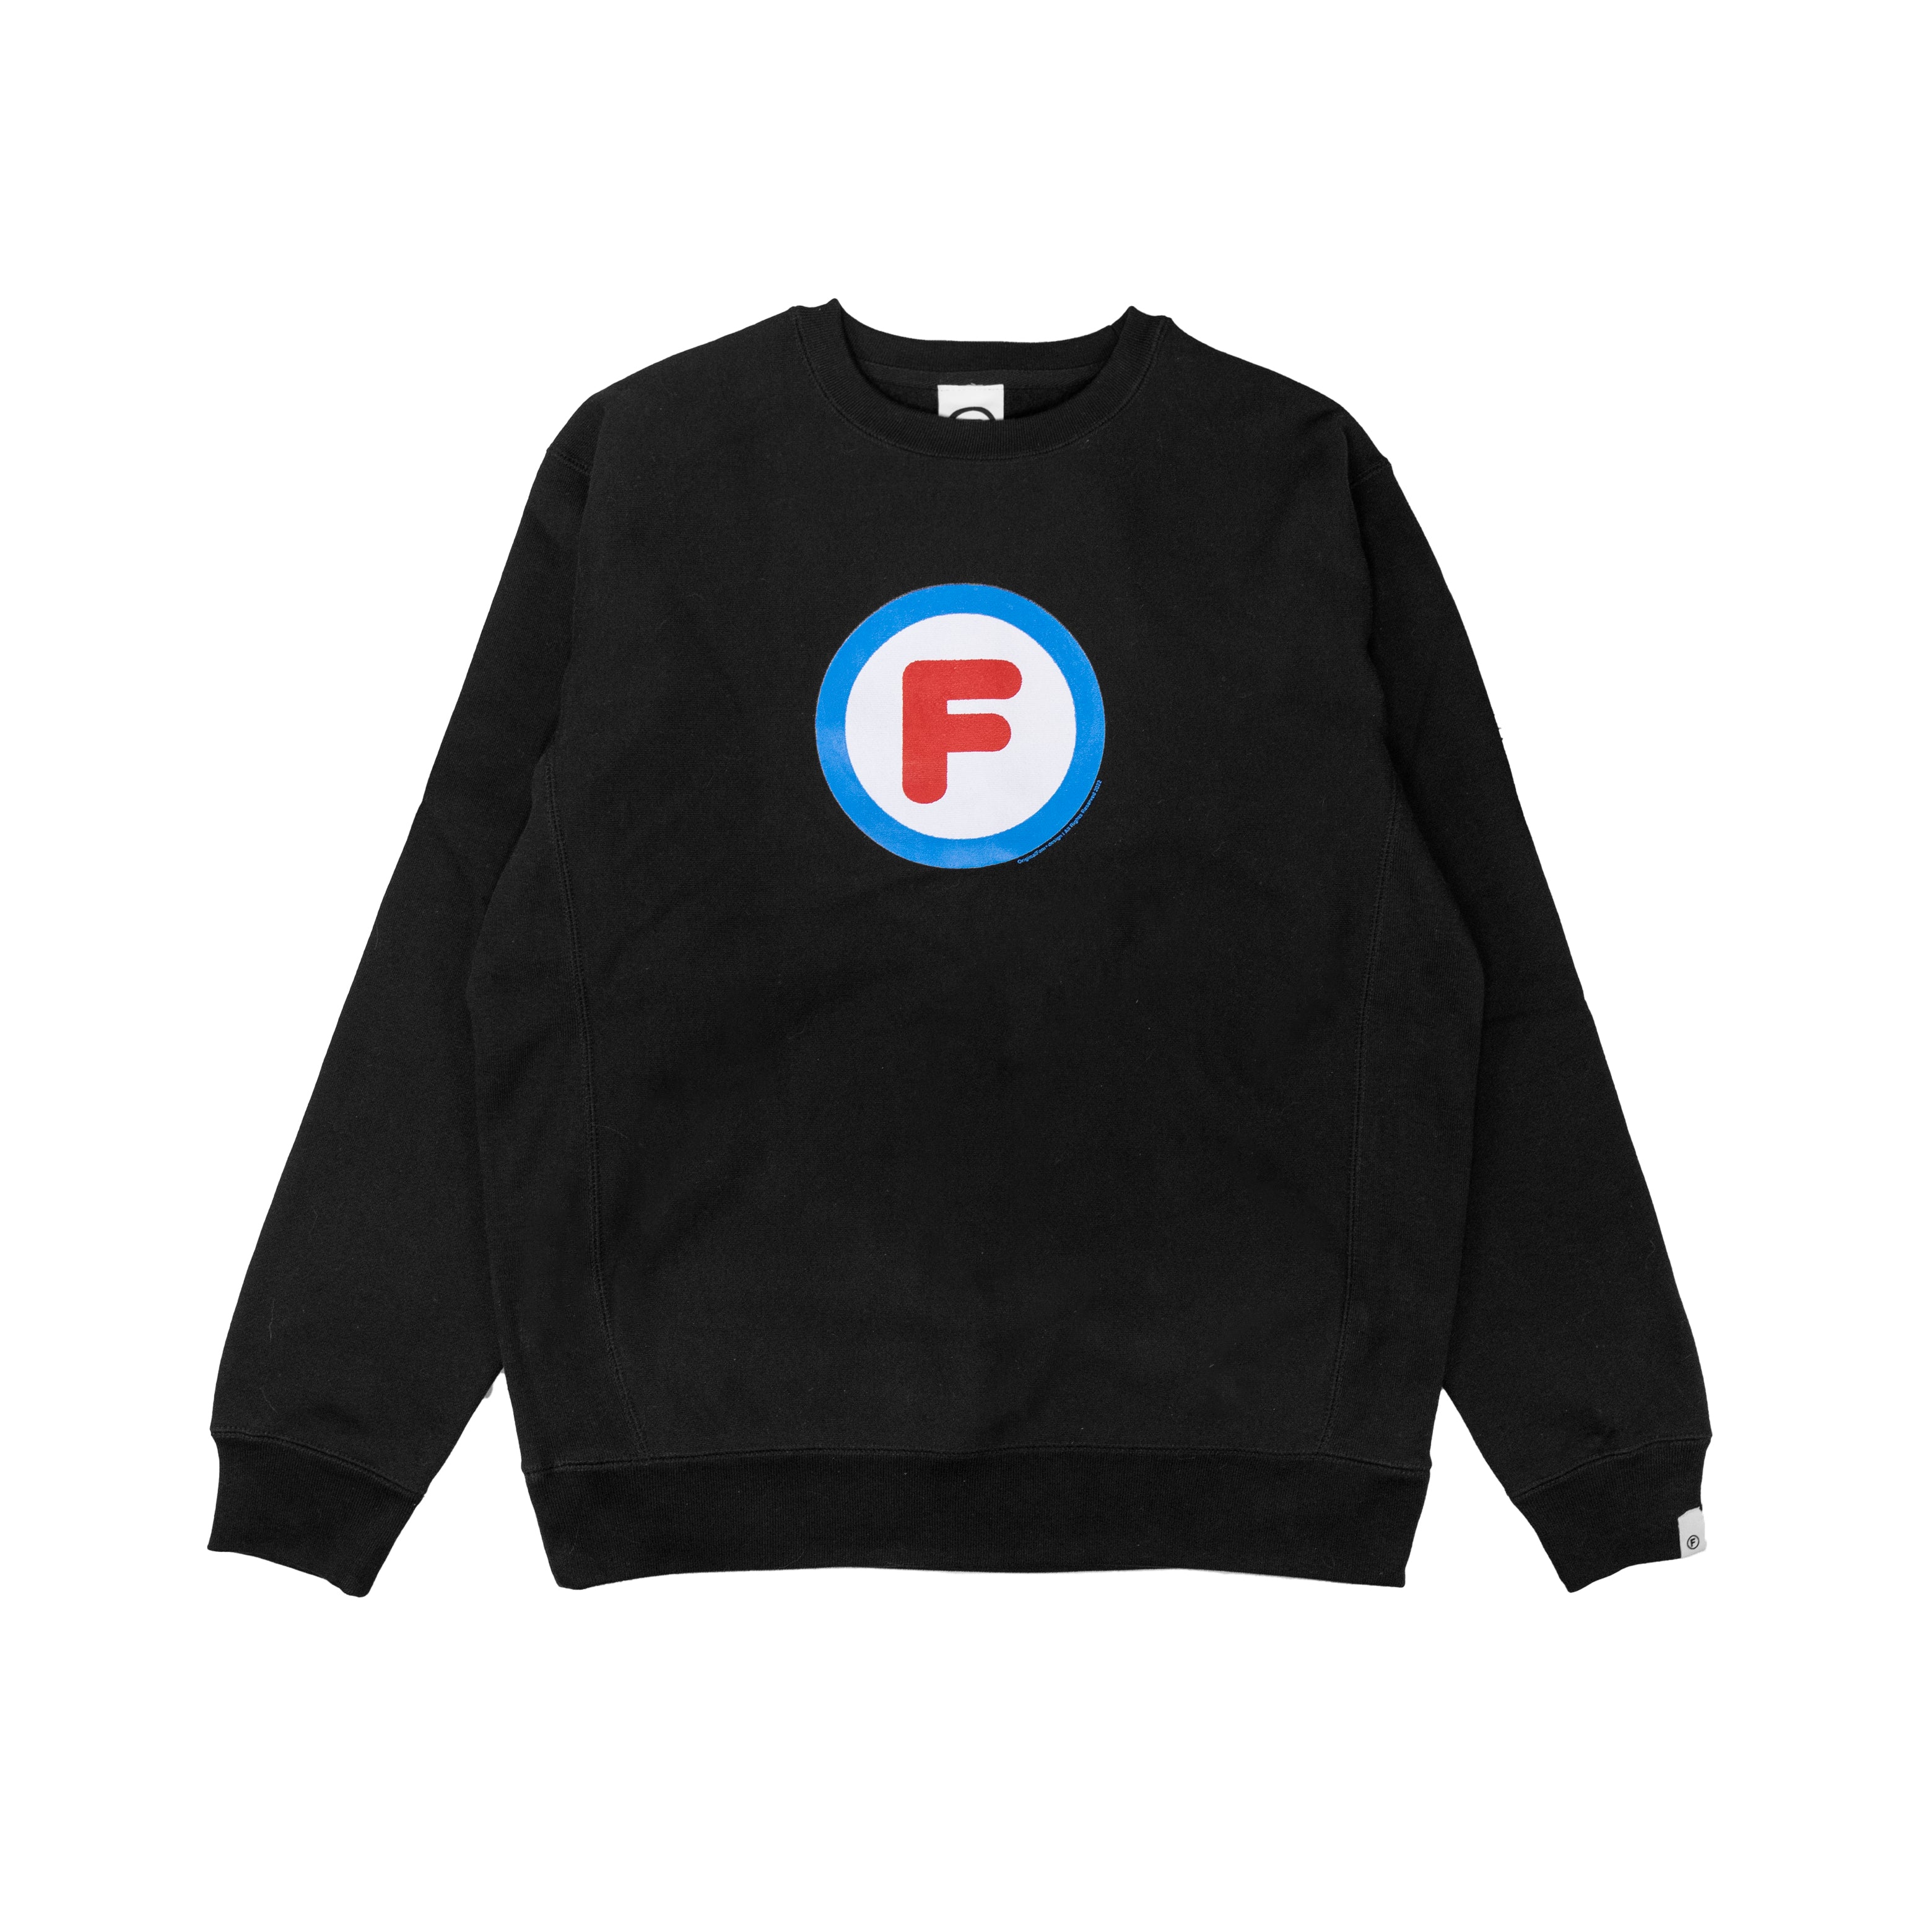 OriginalFani®design "Who" Crewneck Sweatshirt (Black)